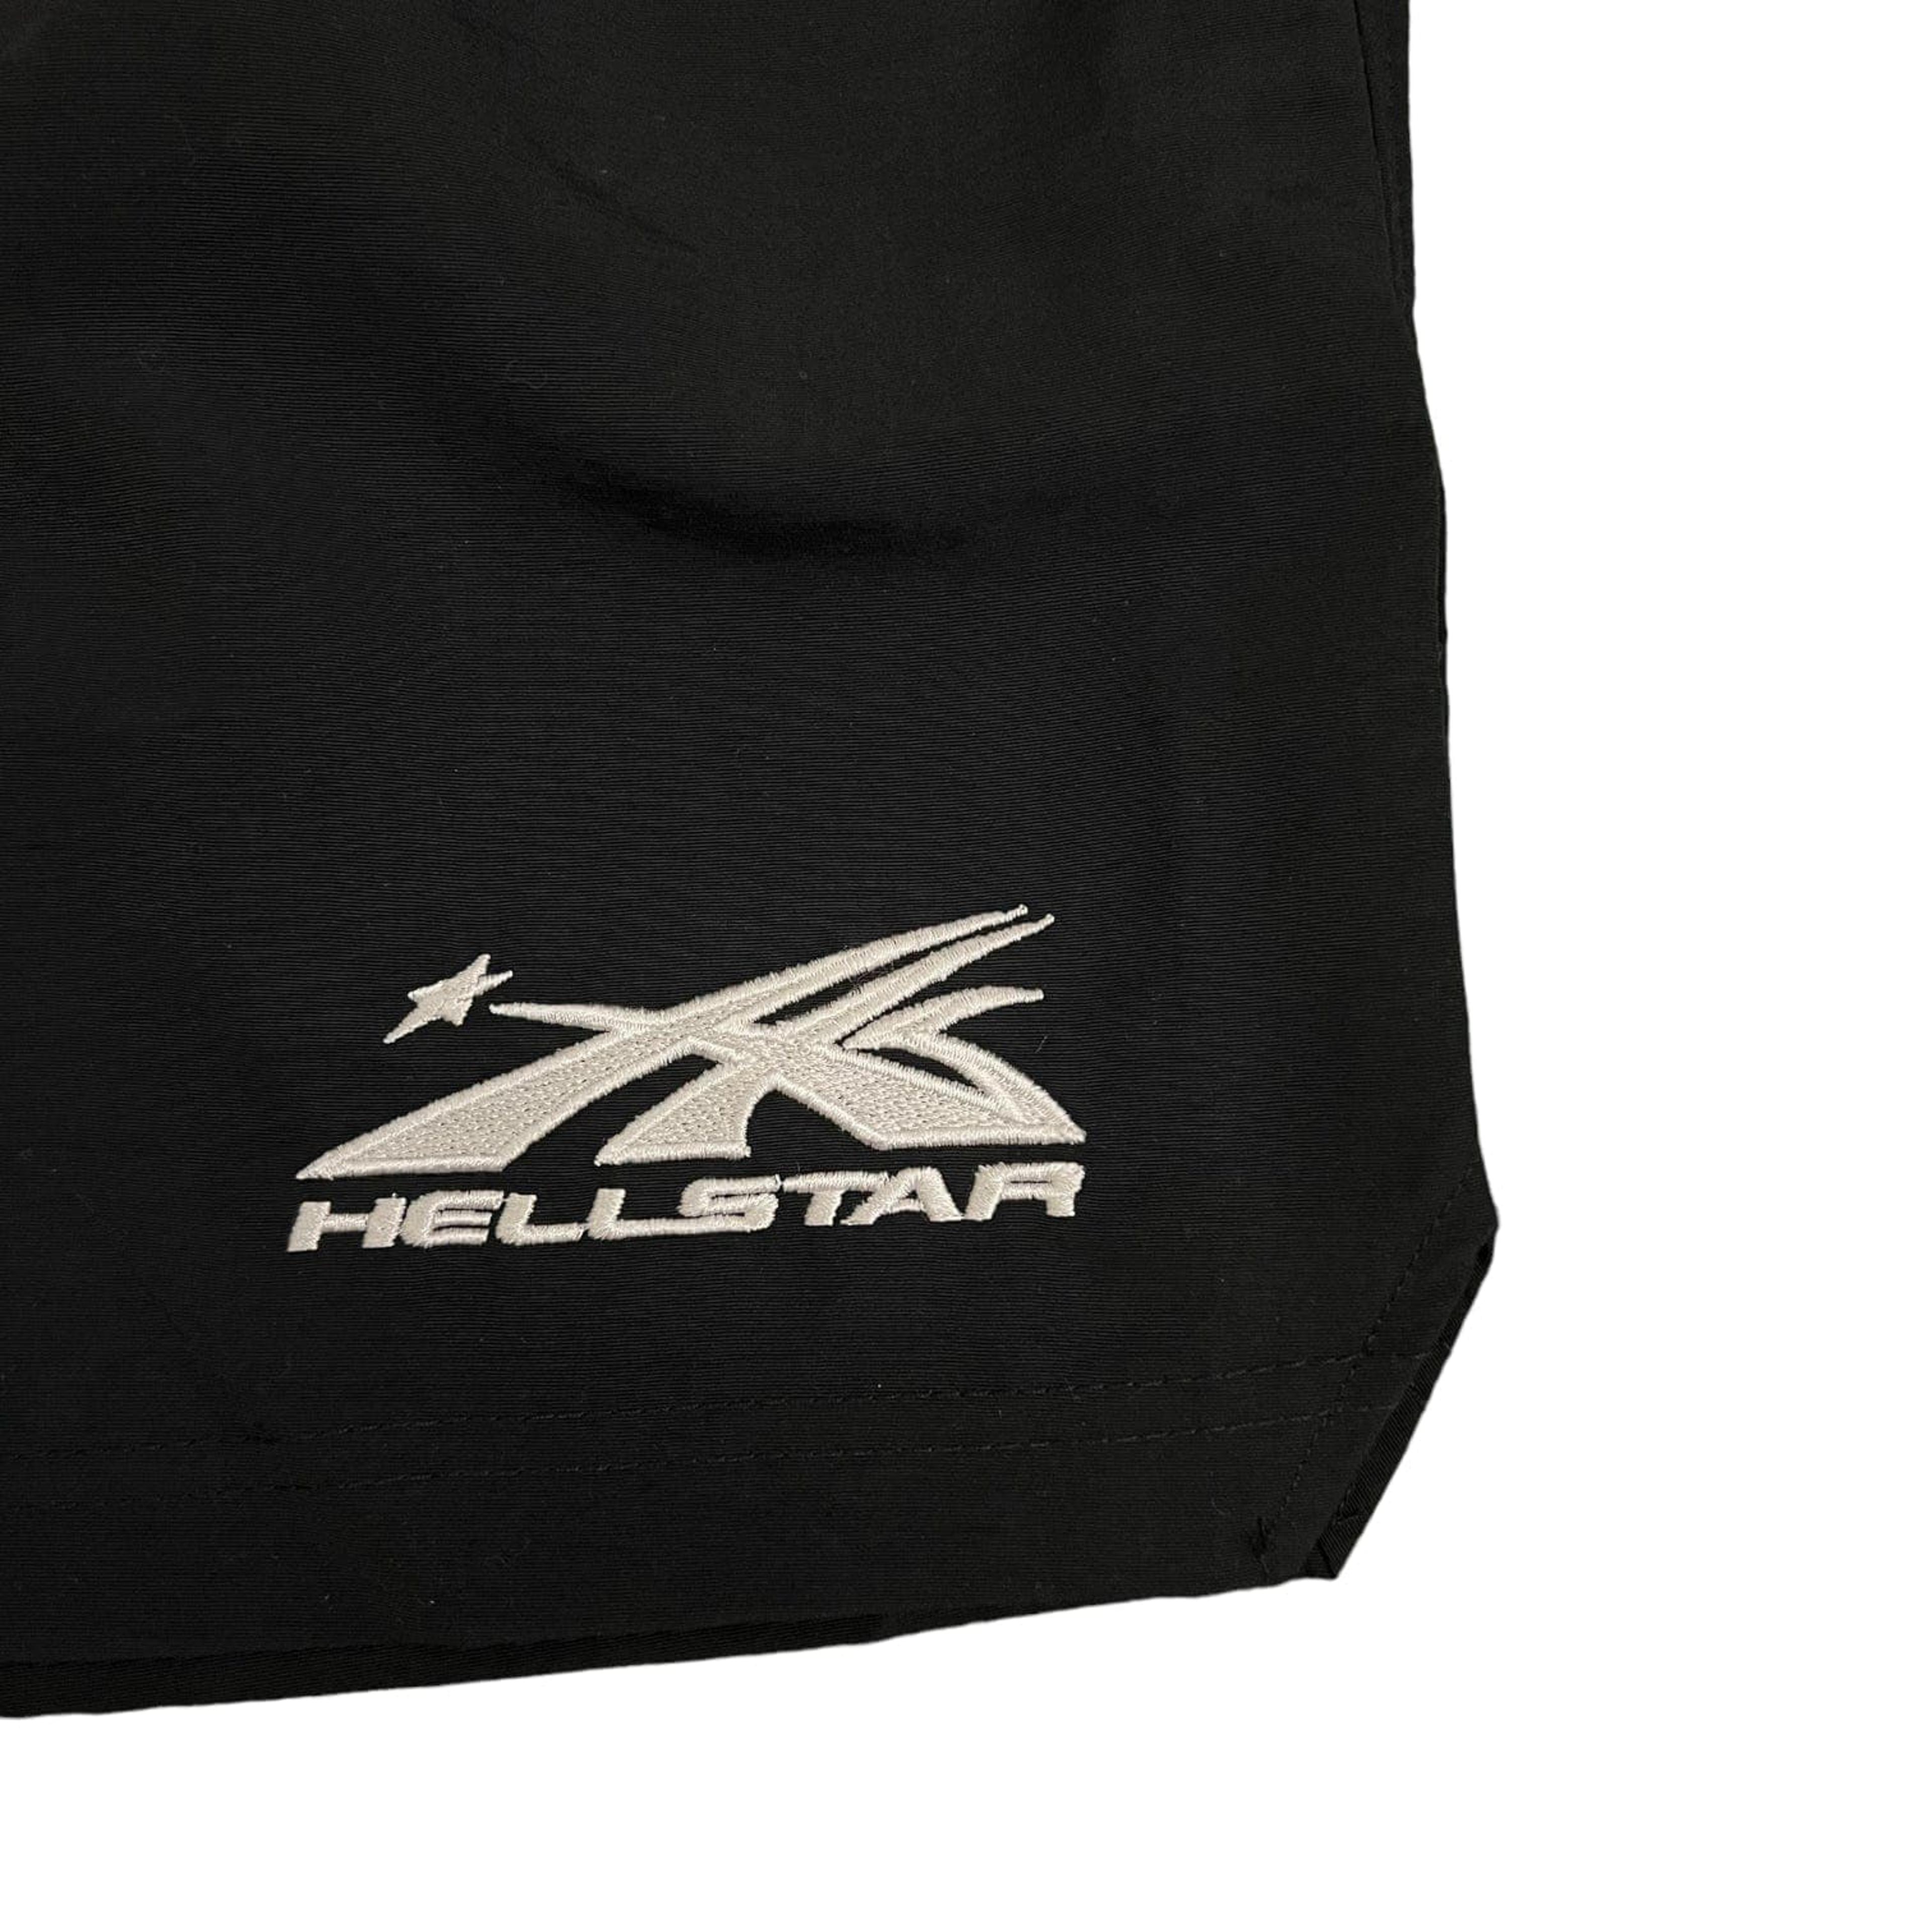 Alternate View 2 of Hellstar Studios Logo Nylon Shorts Black